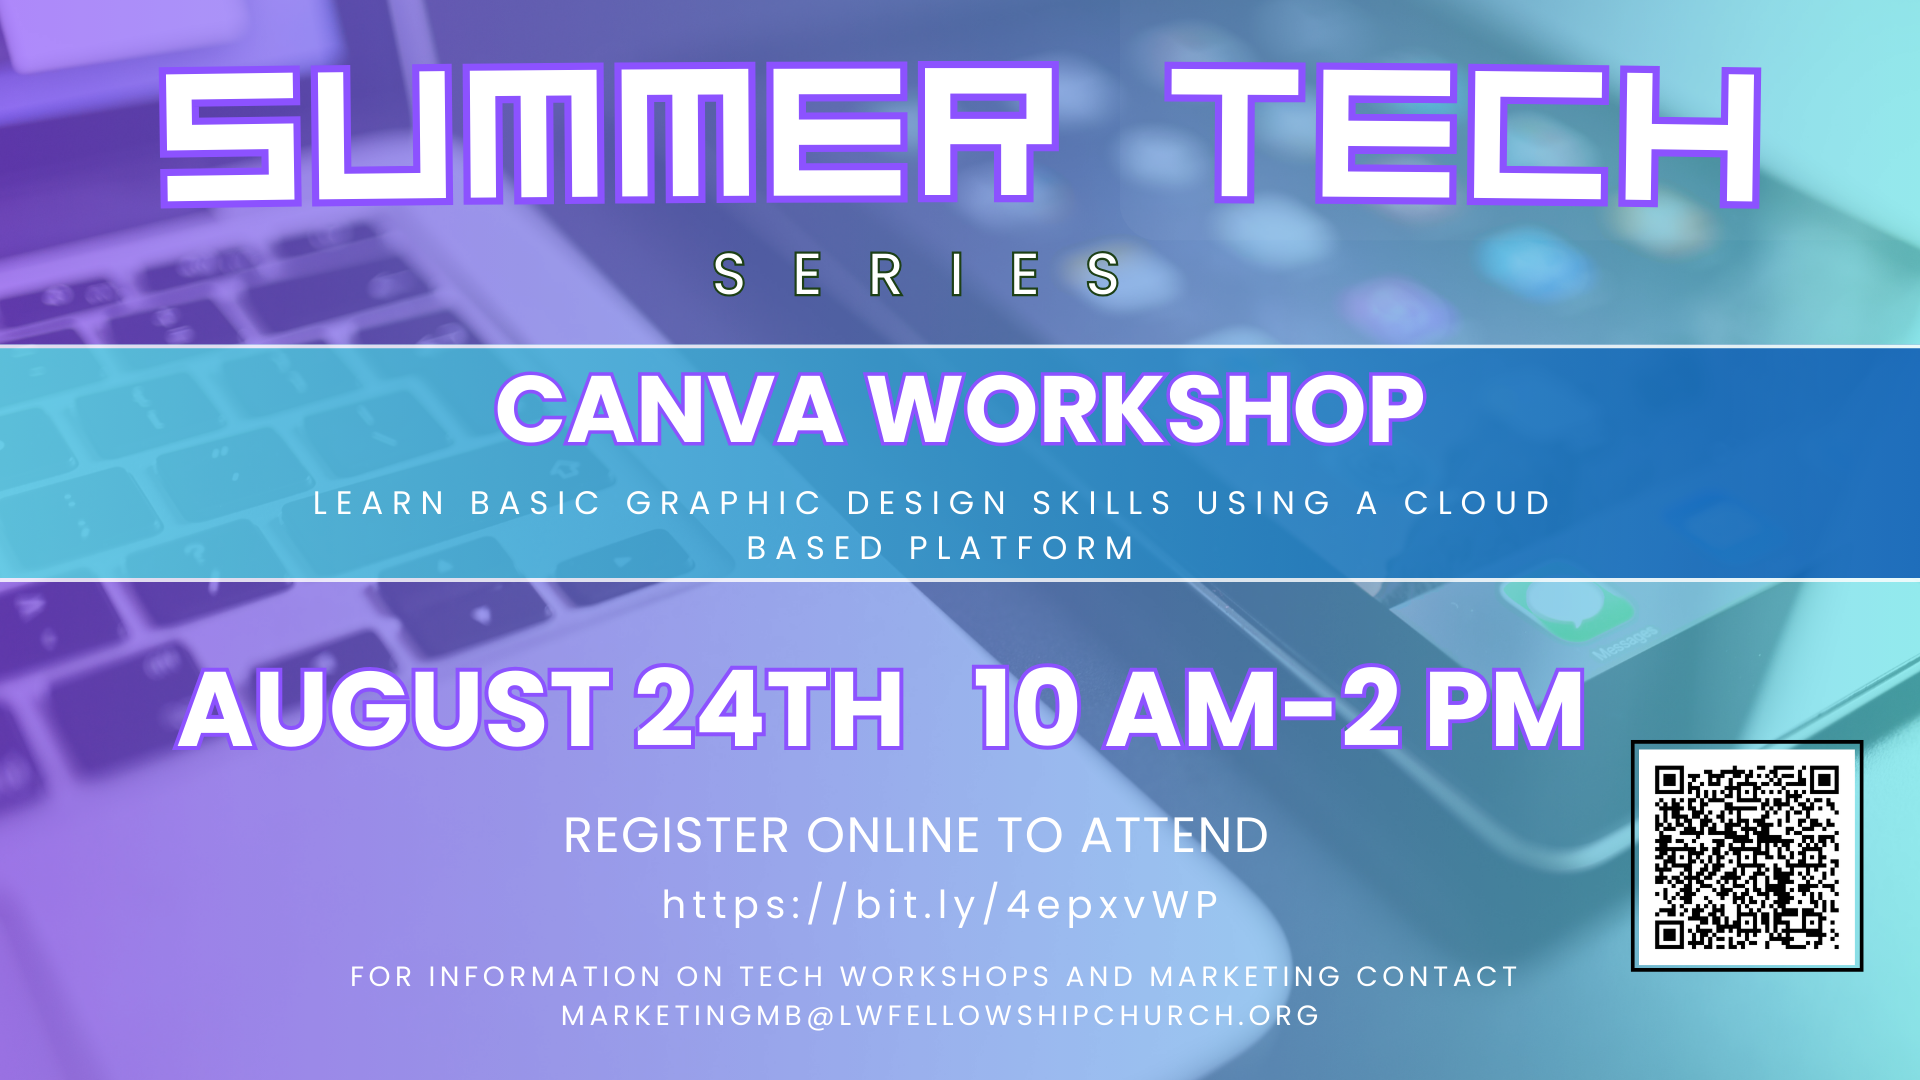 Summer Tech Series – Free Canva Workshop head image